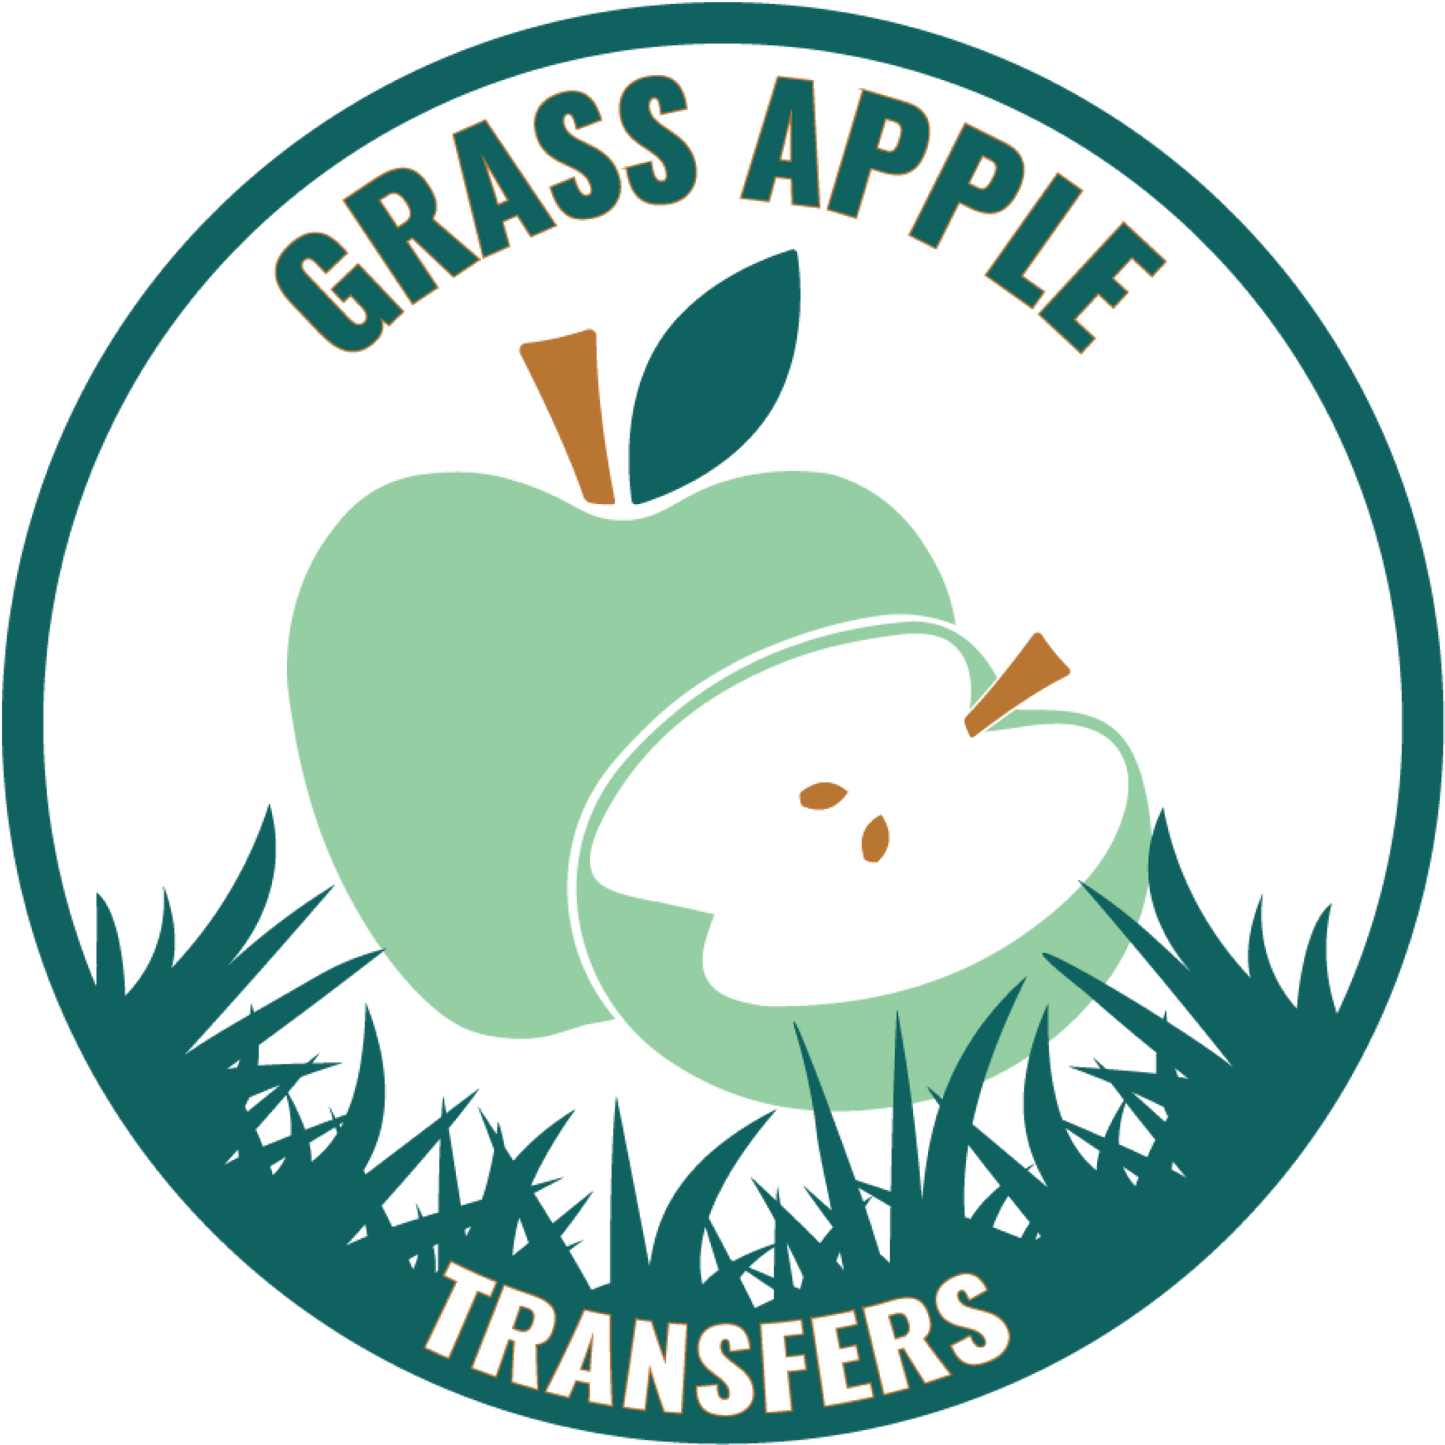 (PREORDER) Grass Apple Tuesday